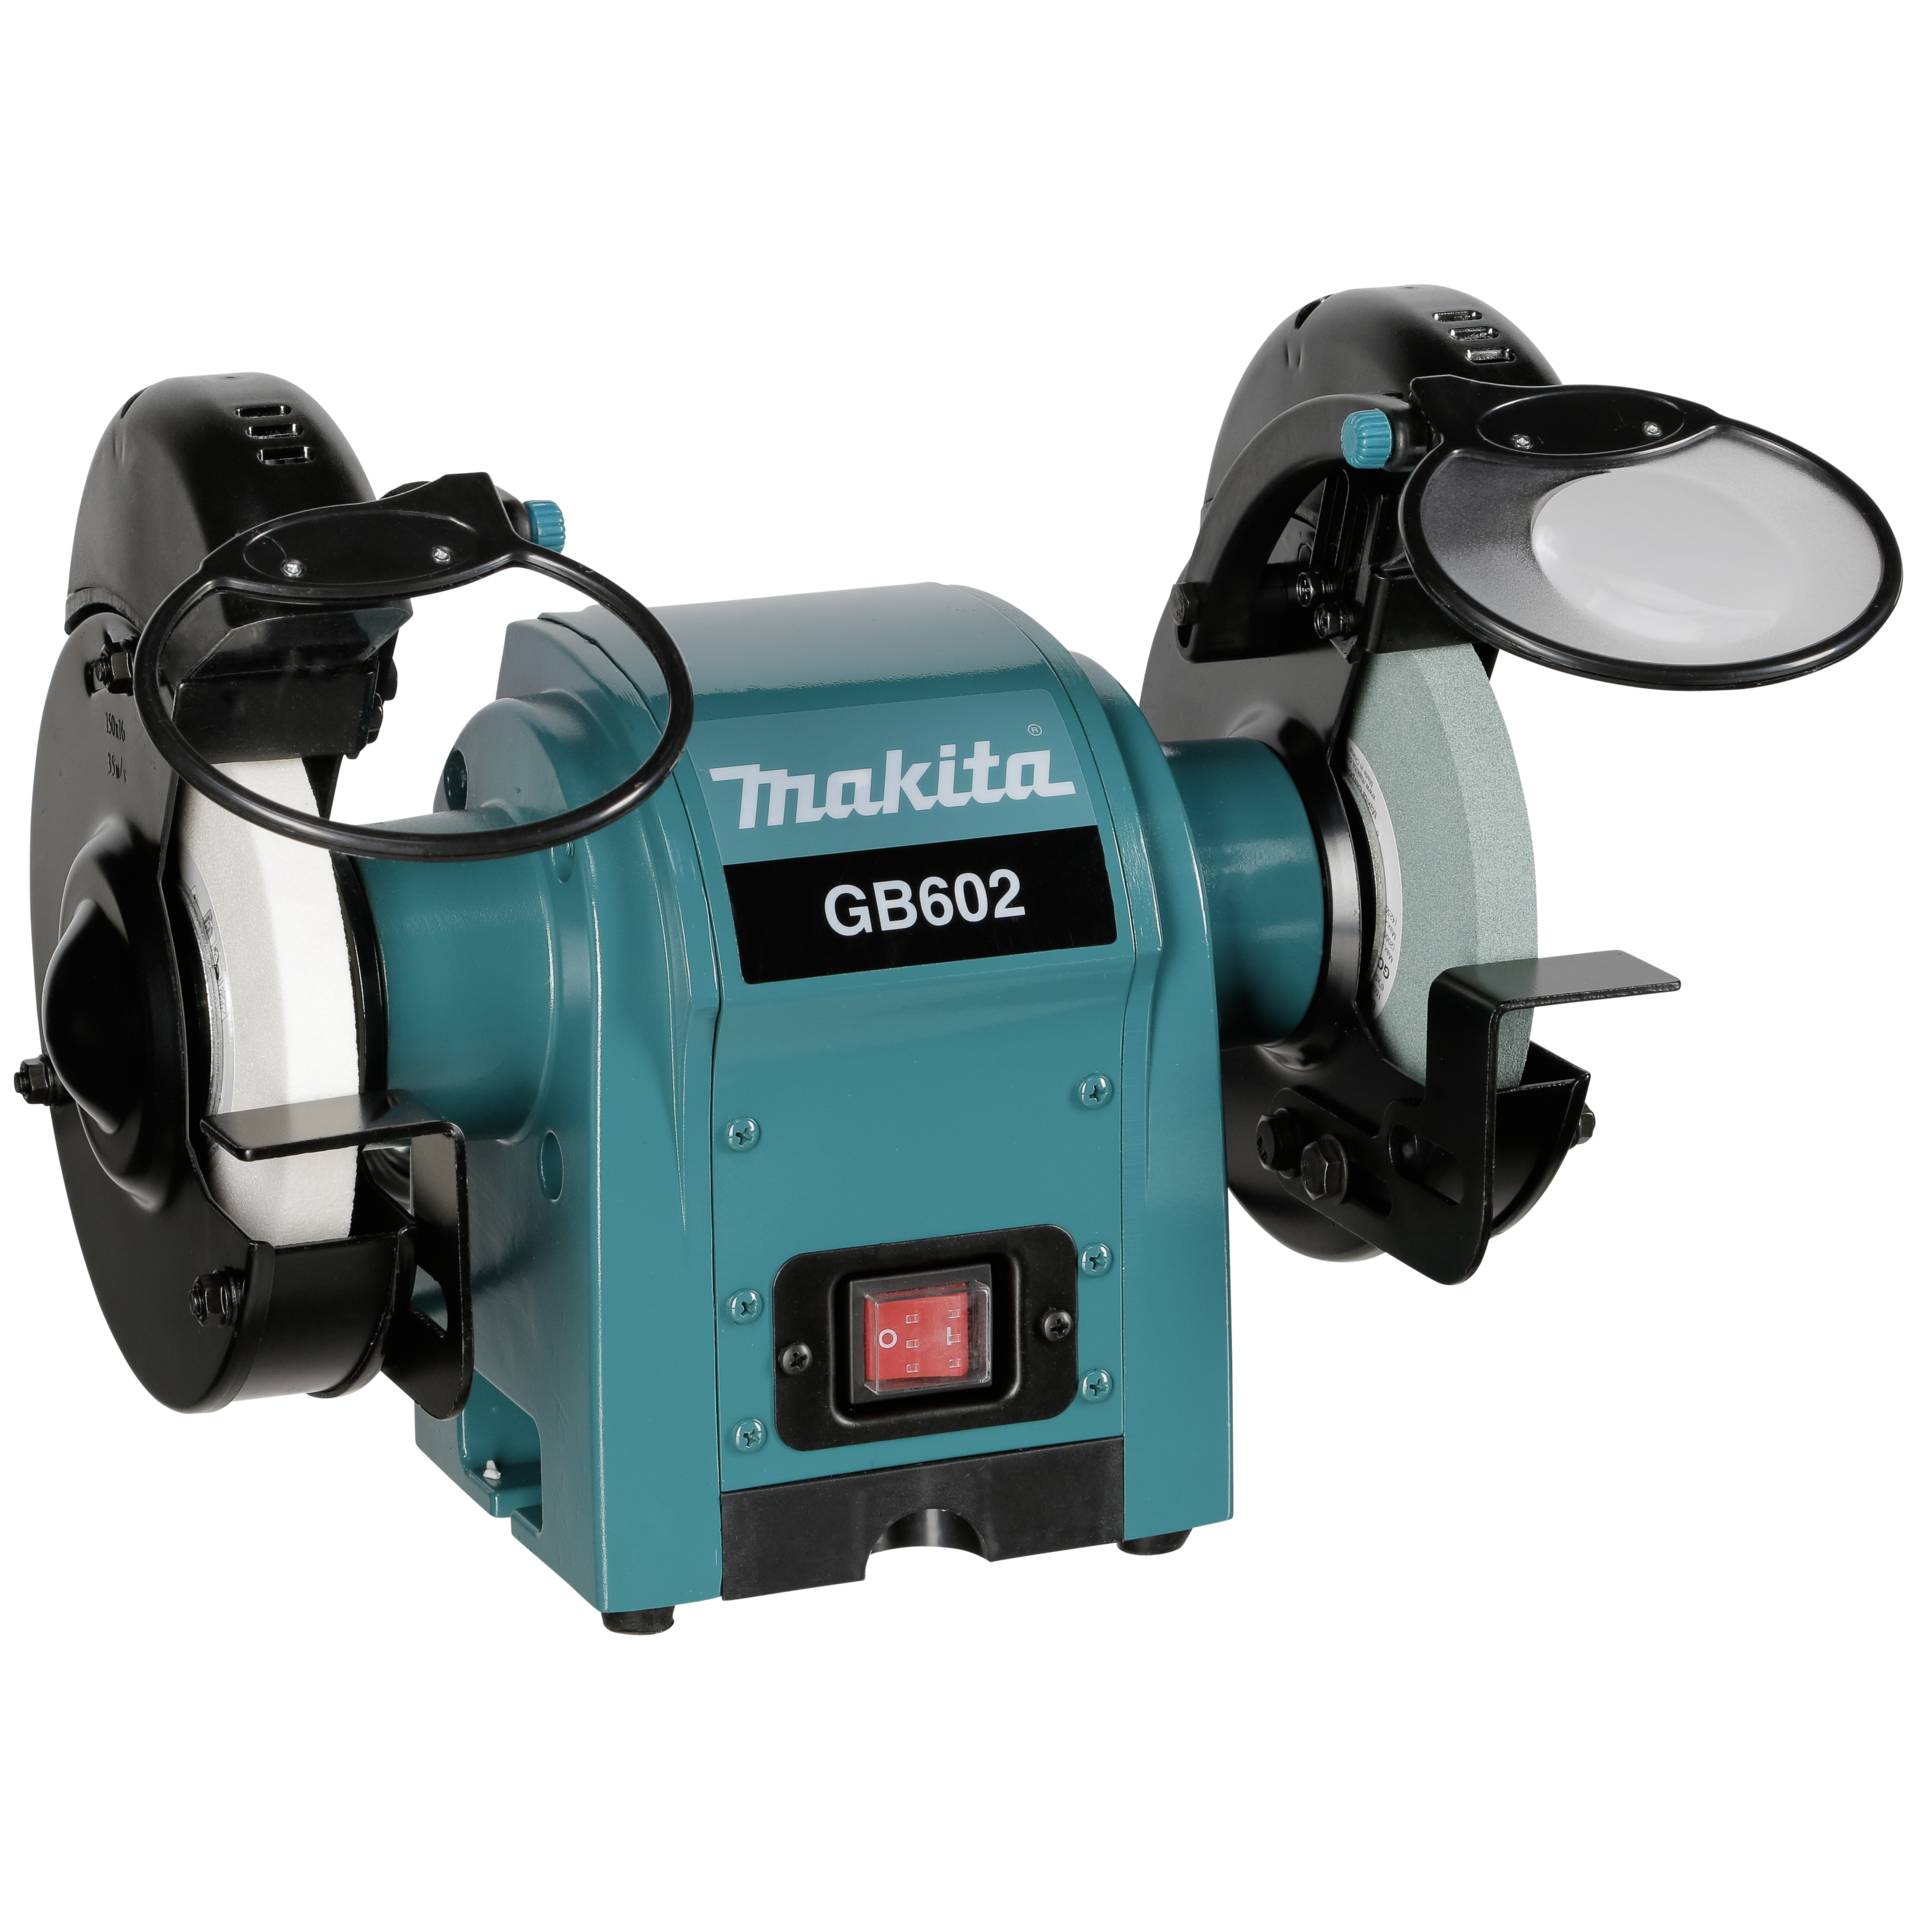 Makita -GB602 Doppelschleifer -Makita Hardware/Electronic